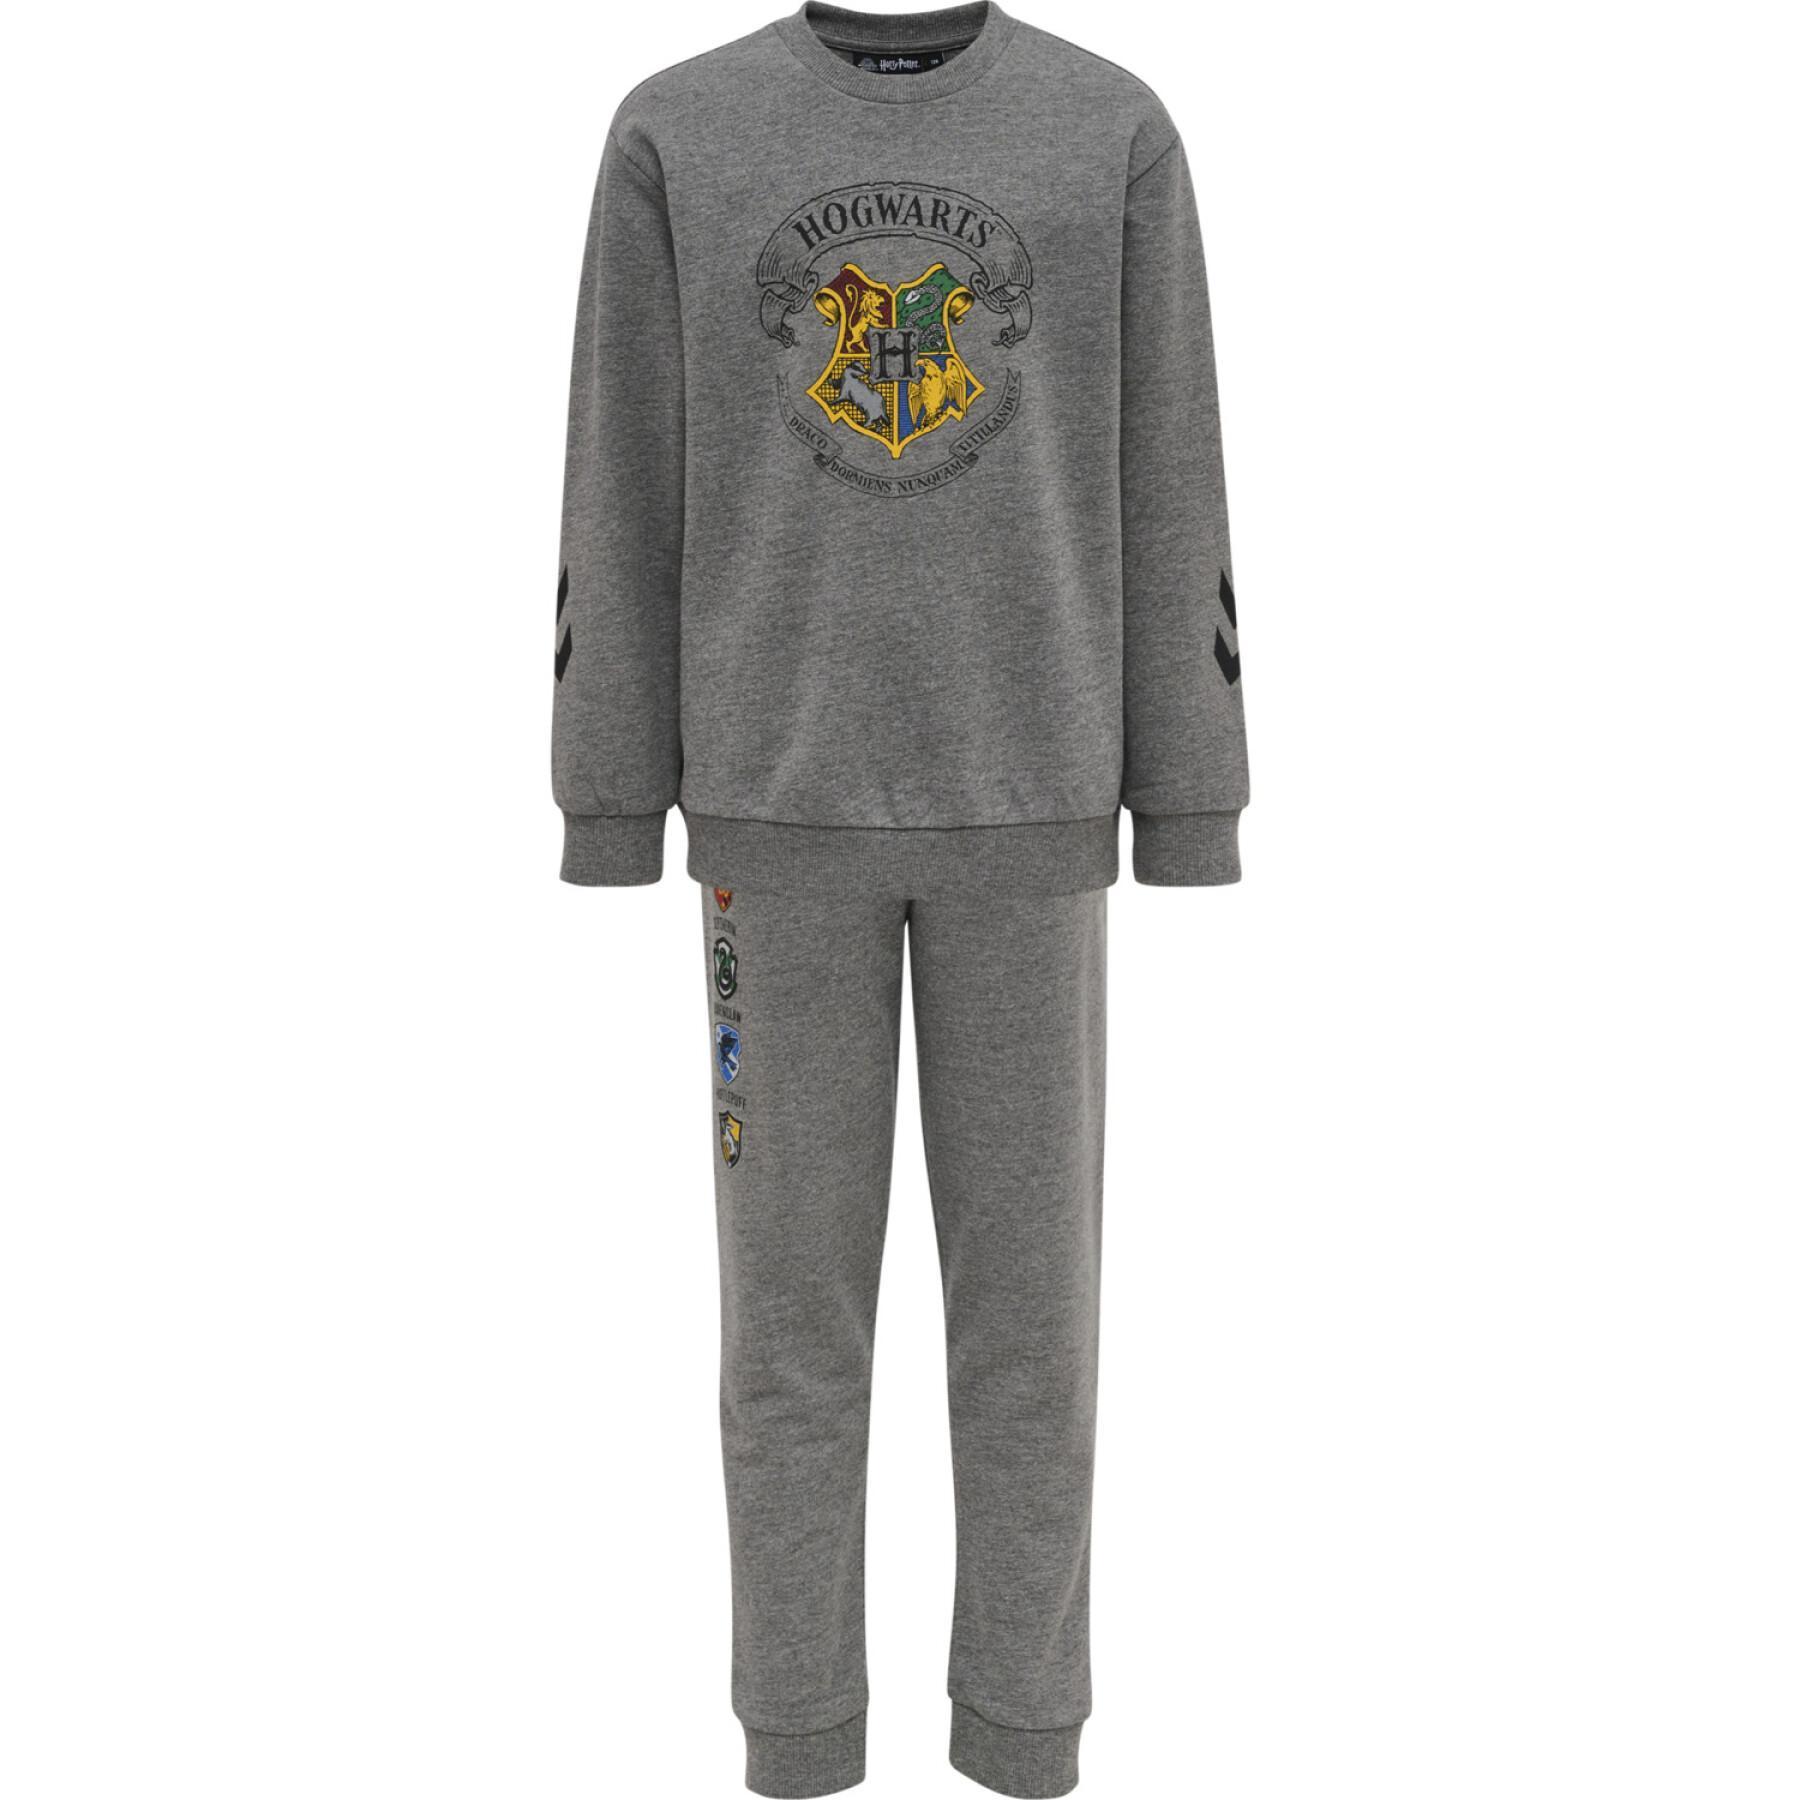 Trainingsanzug für Kinder Hummel Harry Potter Spring